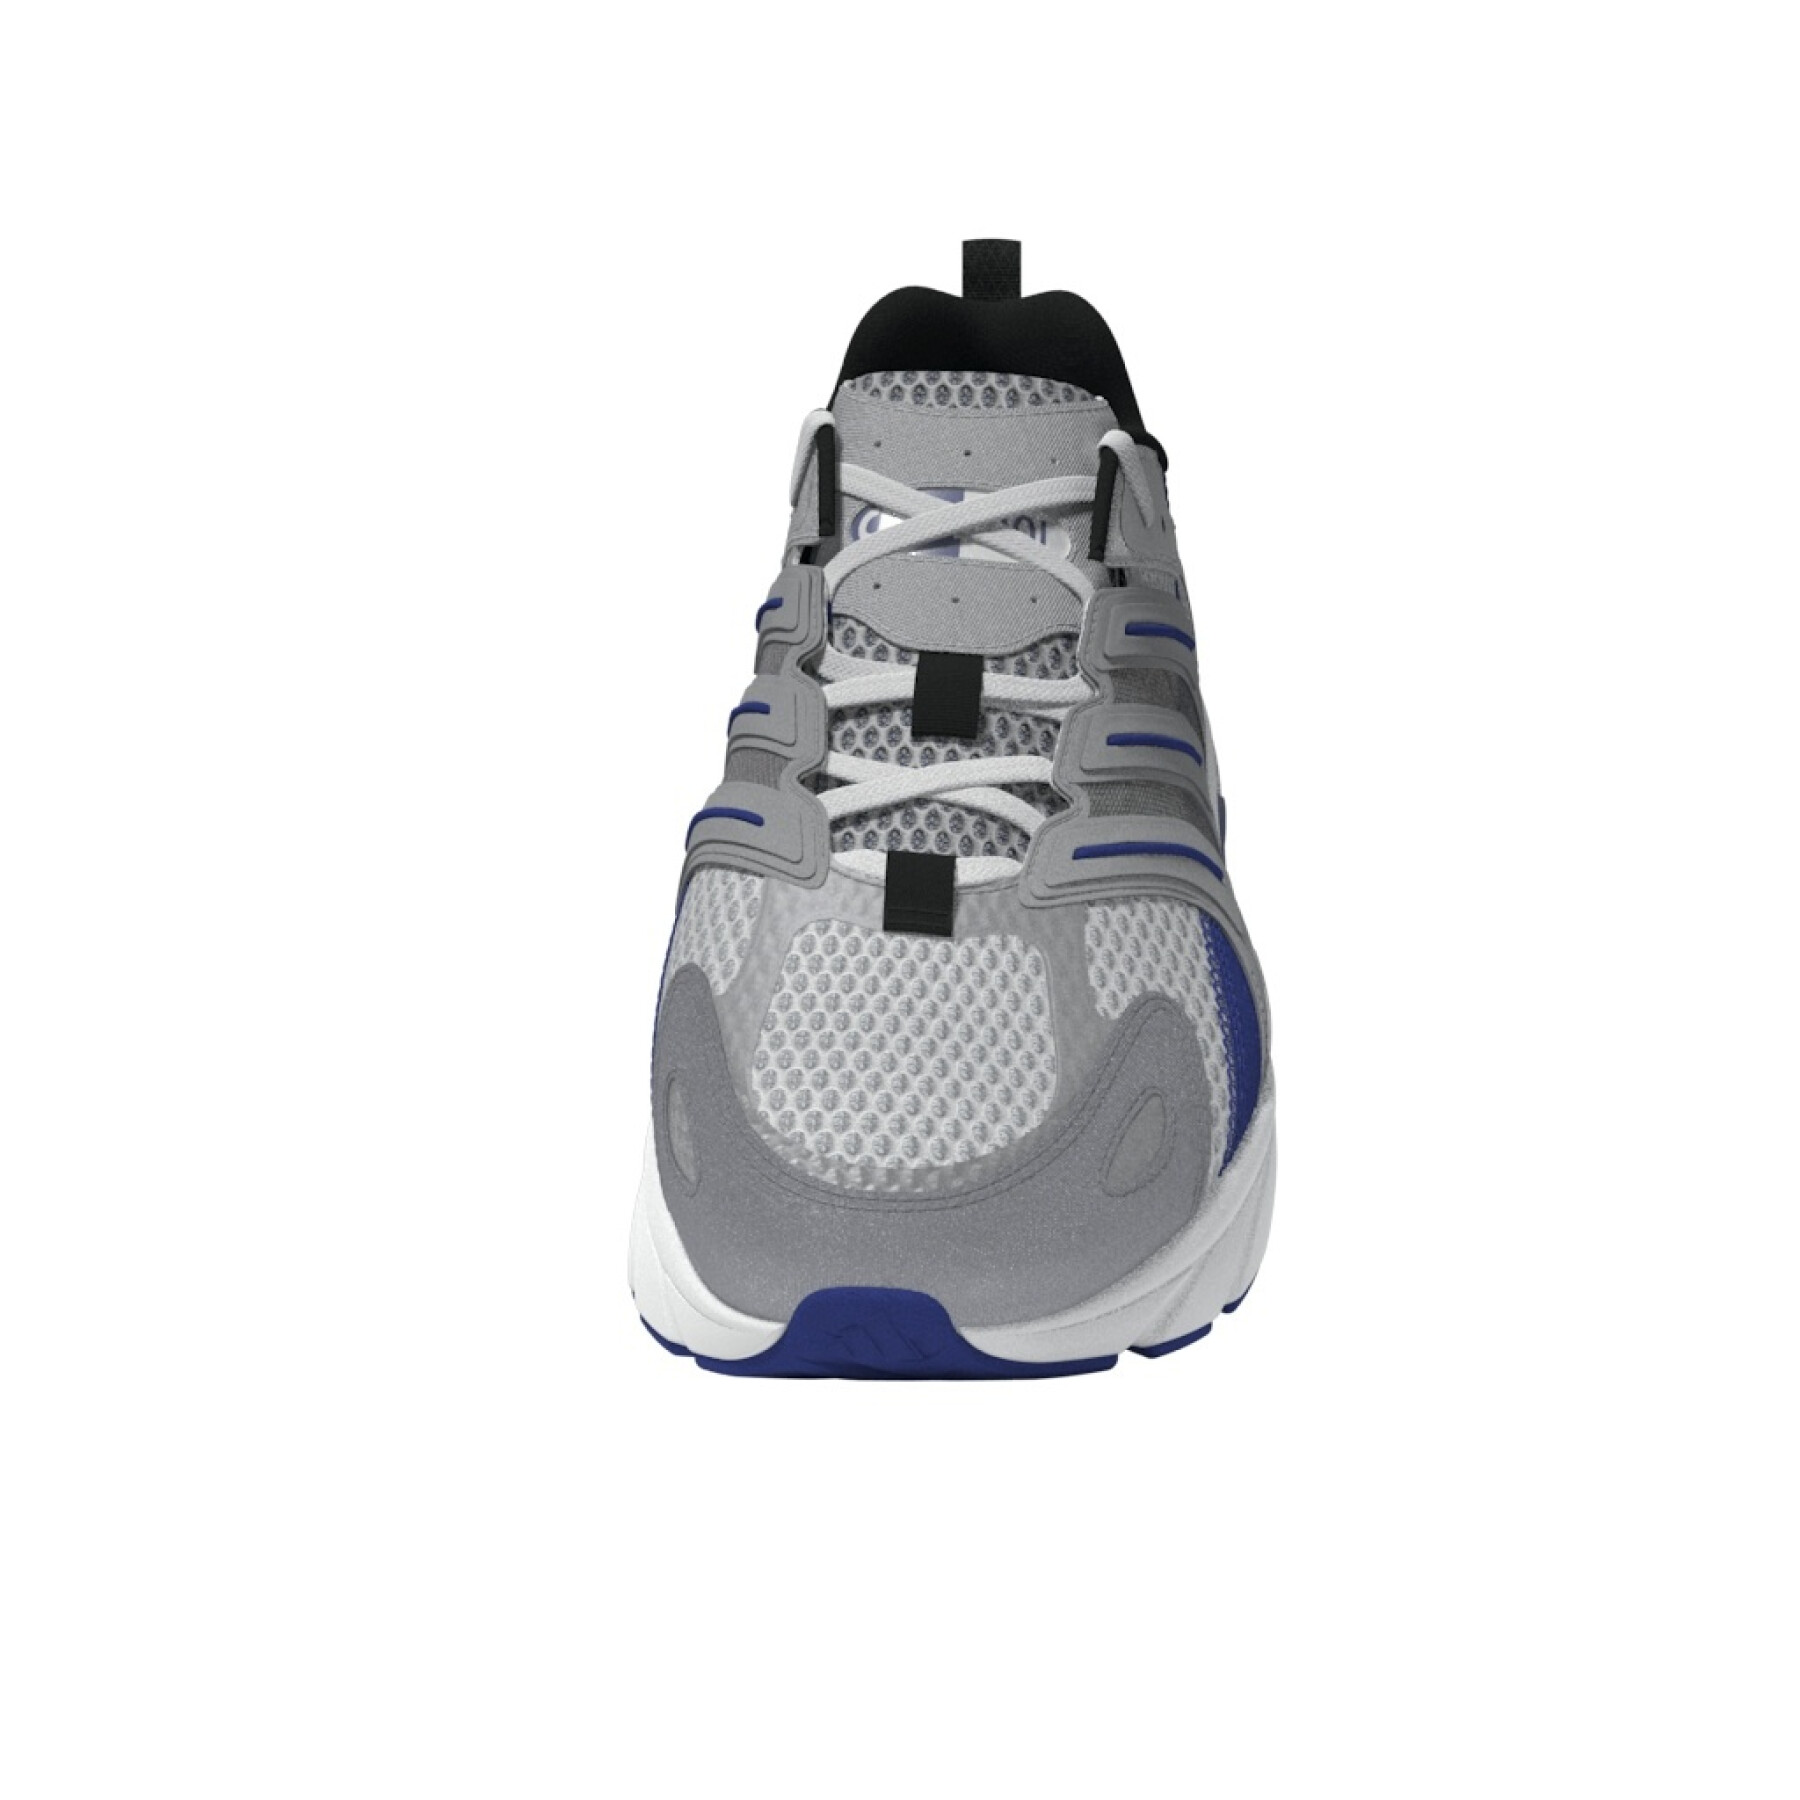 Chaussures de running adidas Climacool Ventania